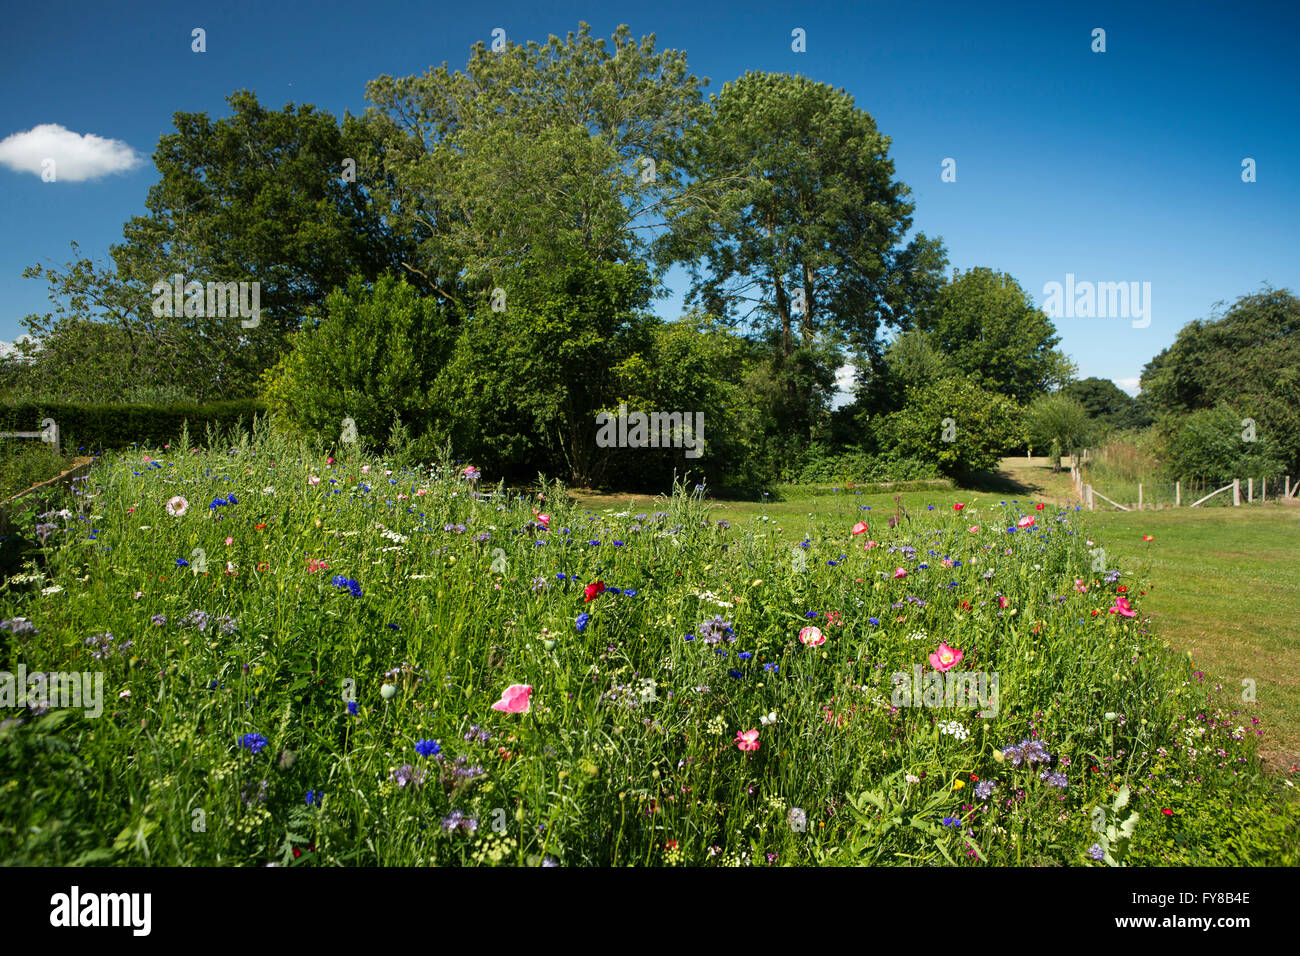 UK, Kent, Smallhythe, Smallhythe Place garden, wild flowers growing at edge of lawns Stock Photo